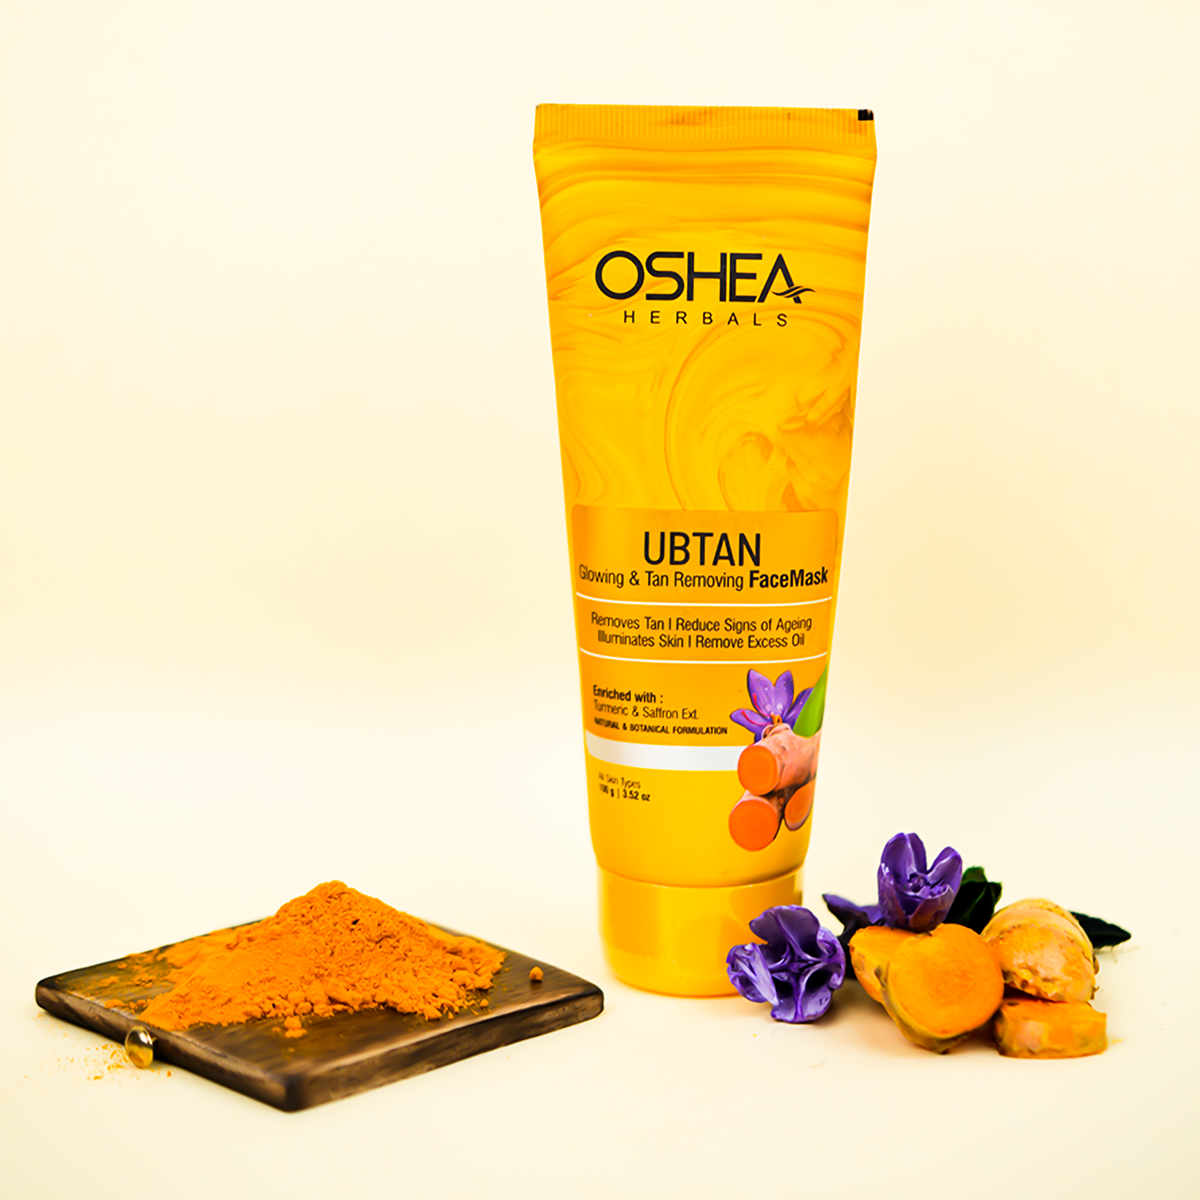  Ubtan Glowing & Tan Removing Face Mask Oshea Herbals